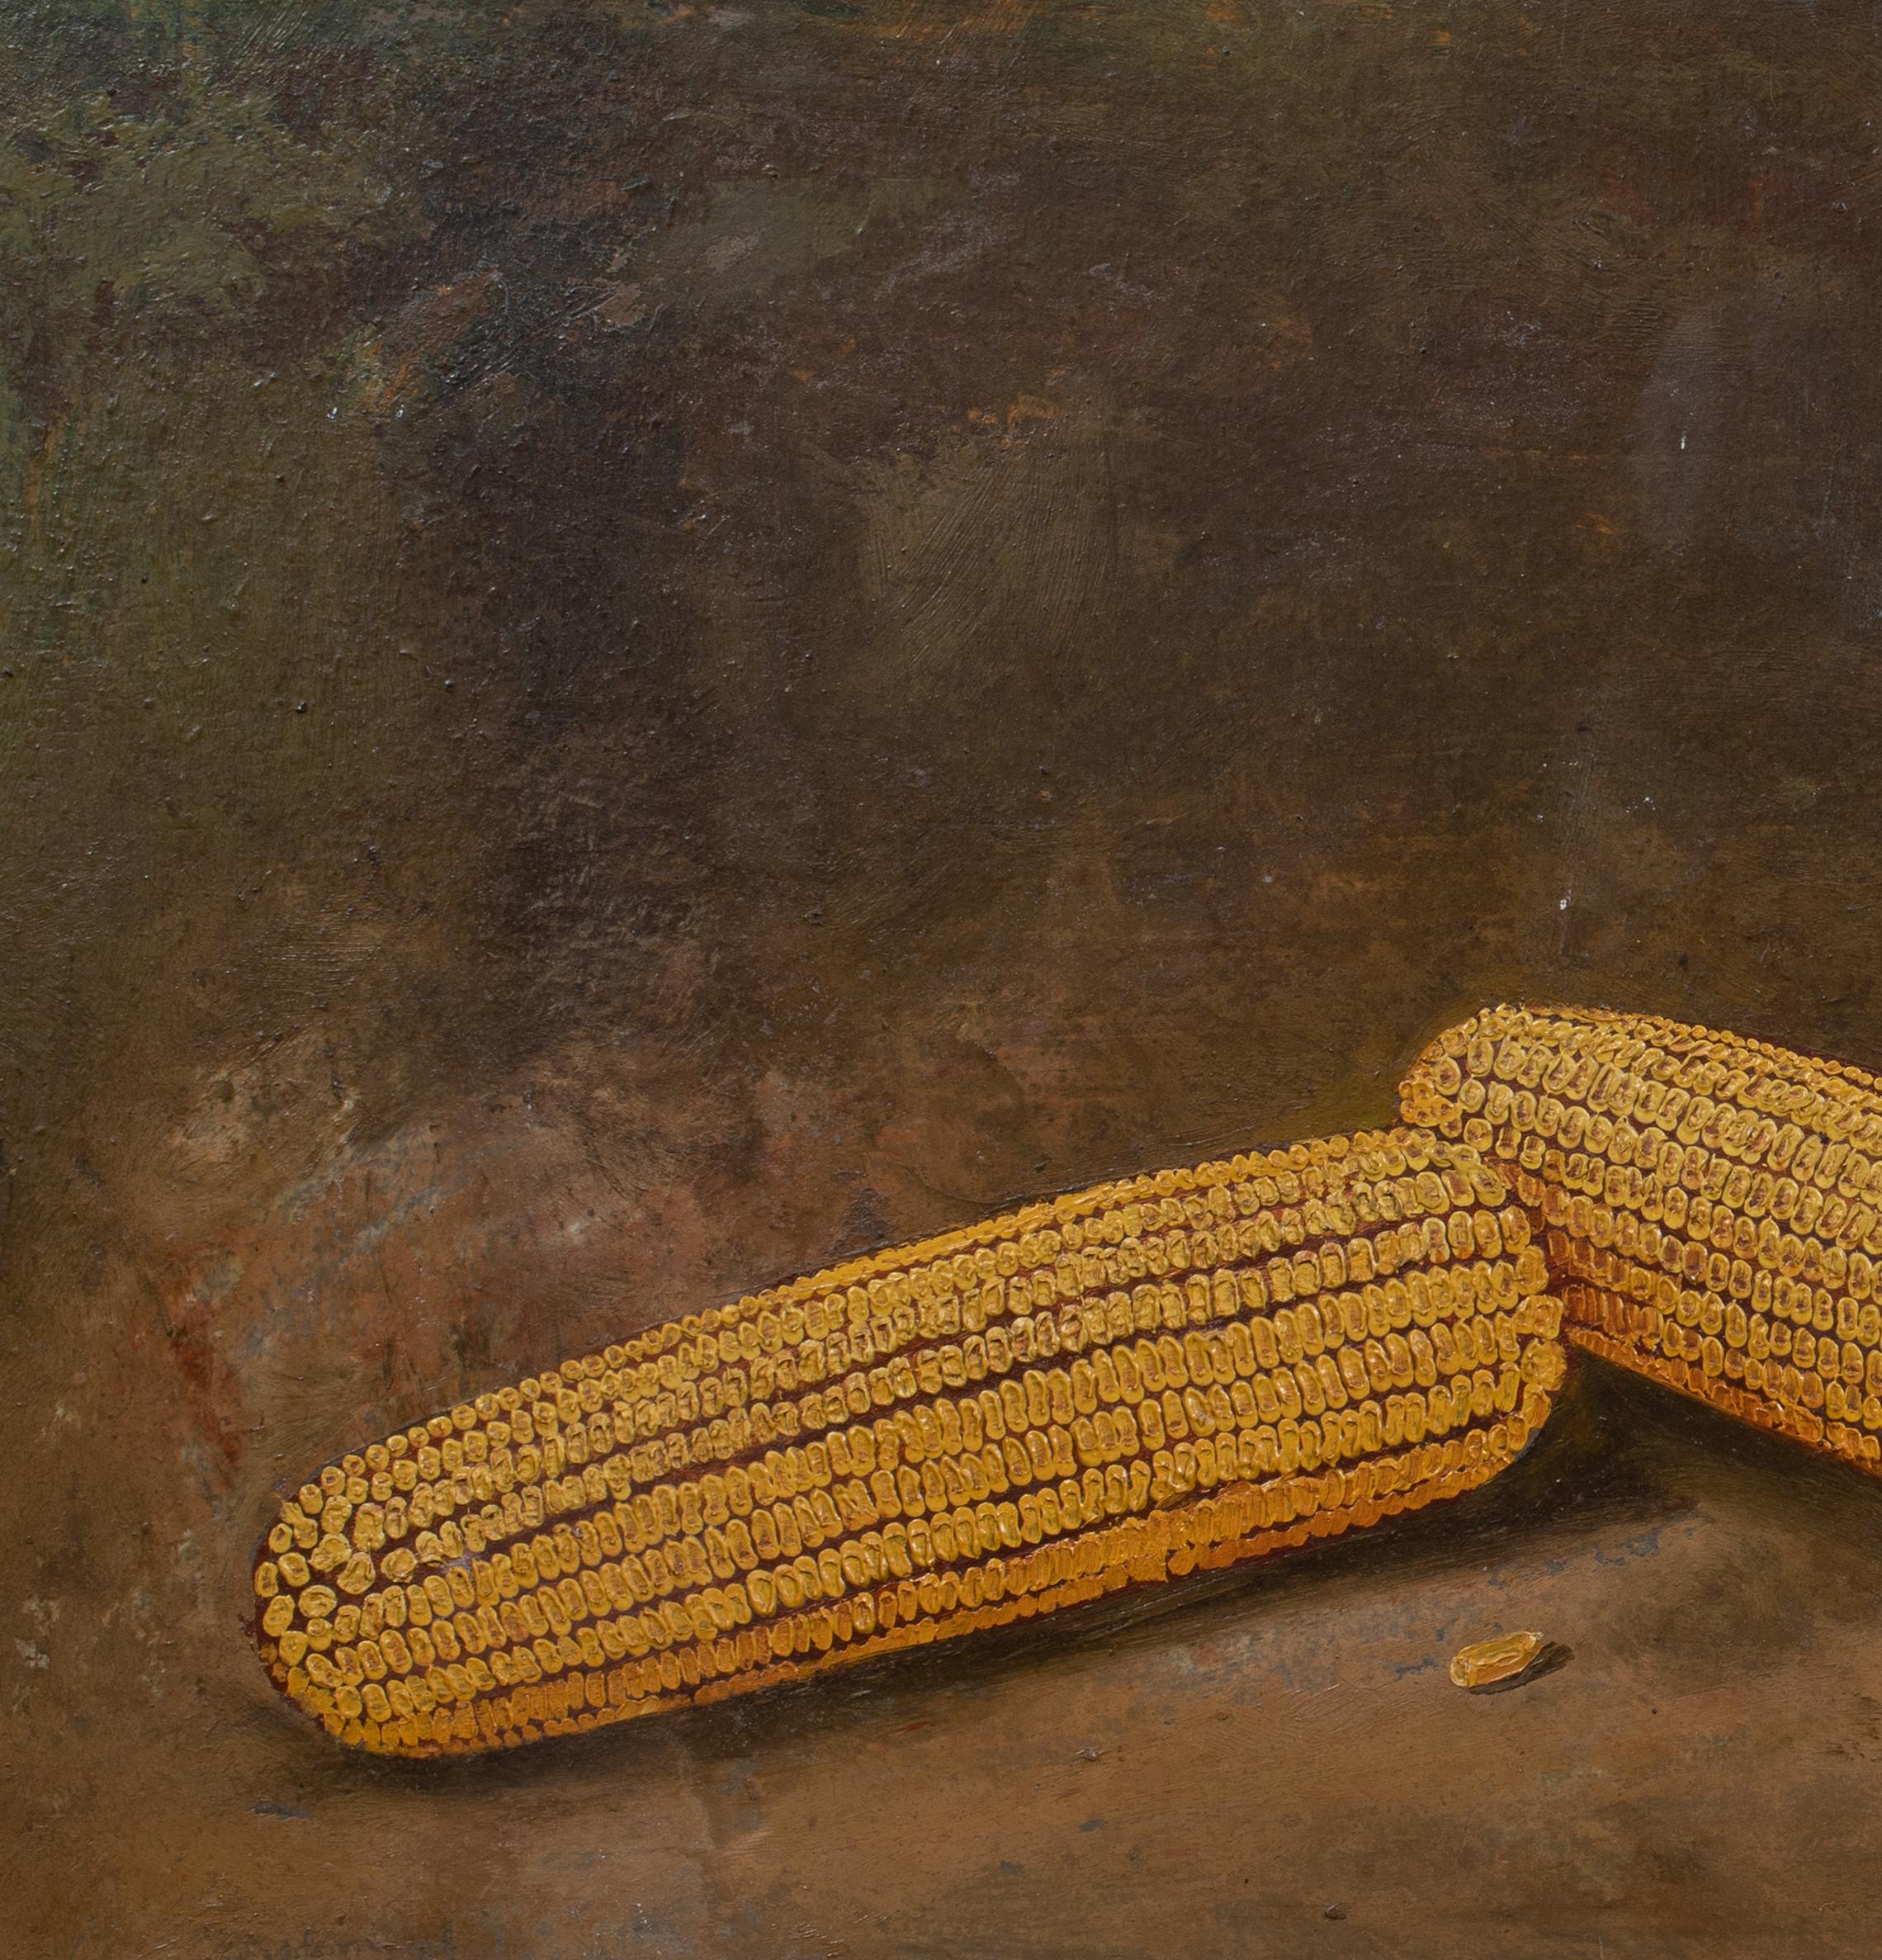 corn cob painting